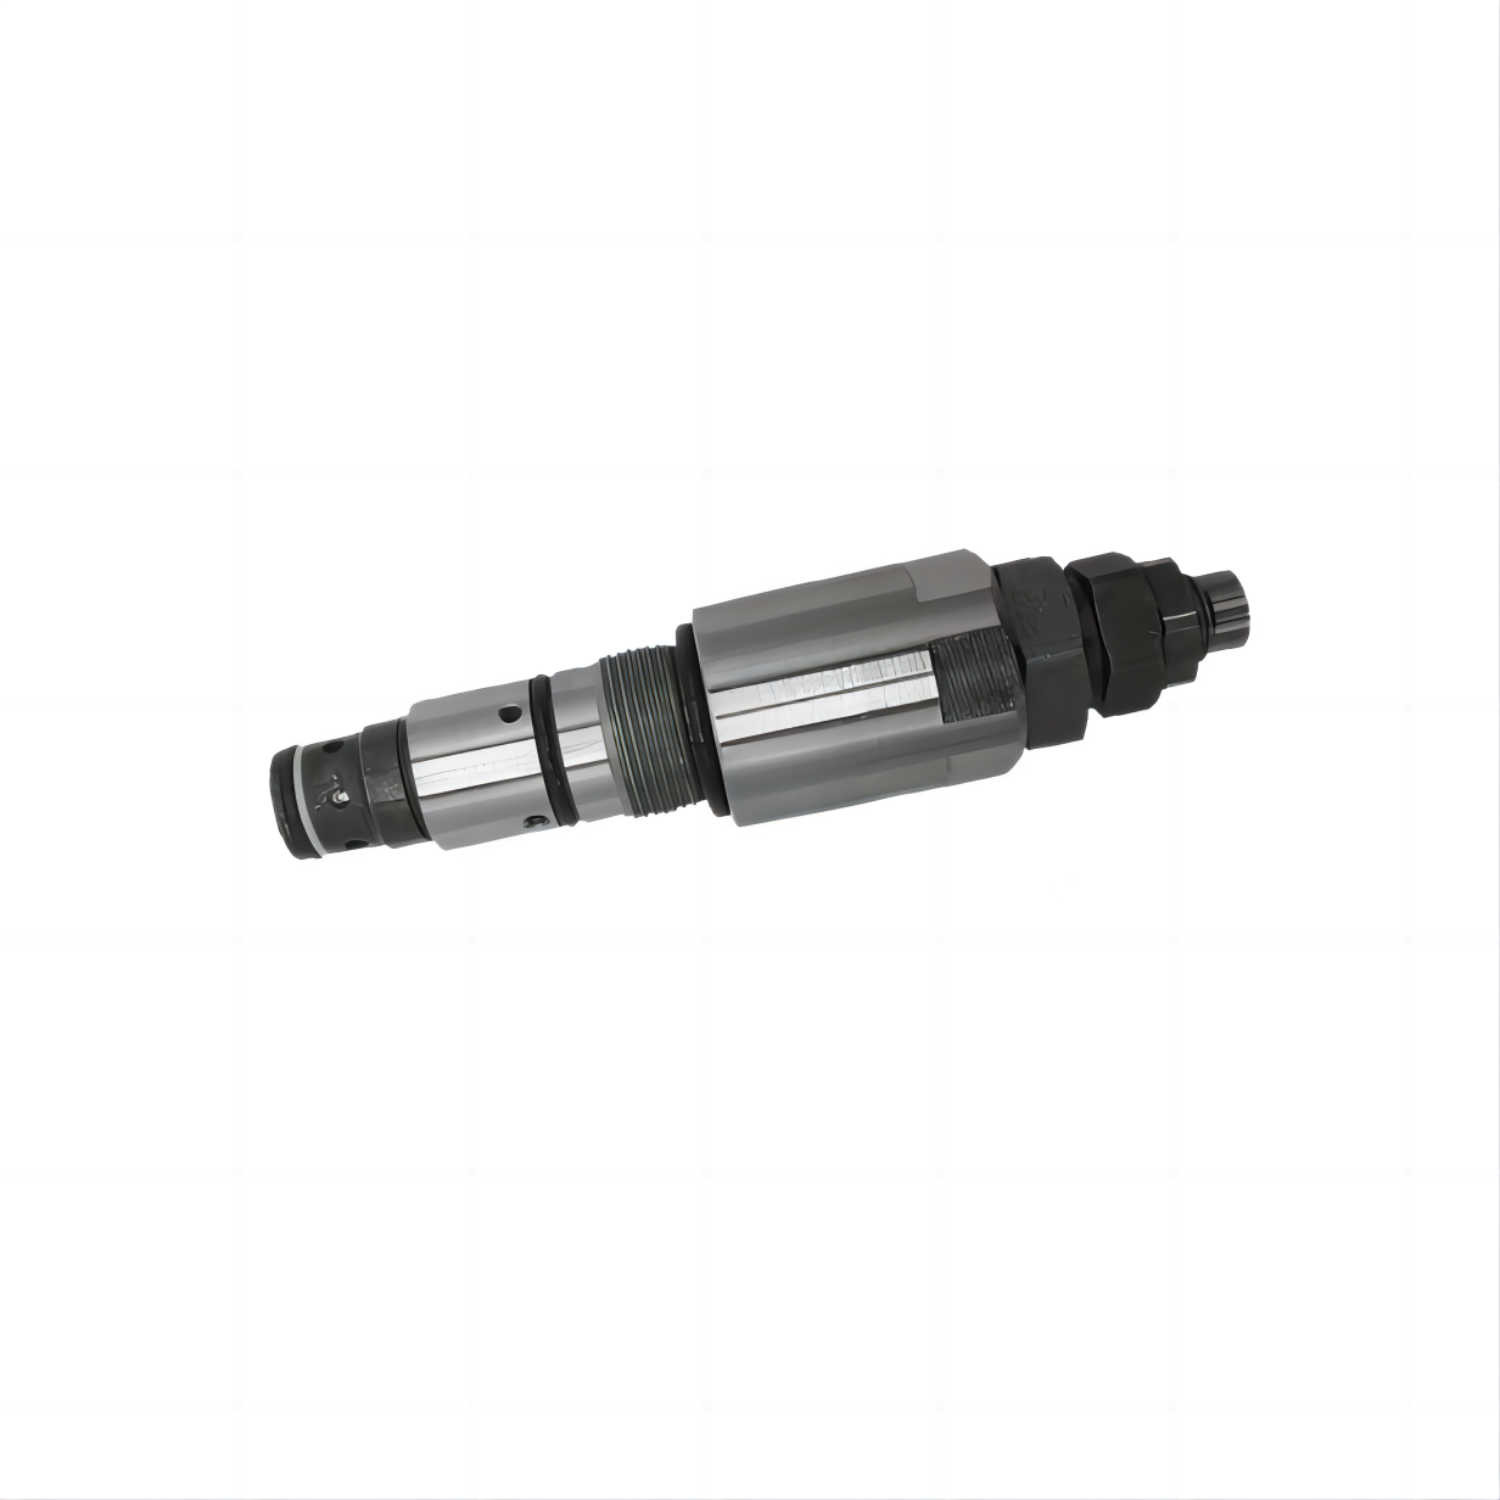 XKBF-01291 Loader accessories Excavator accessories Main relief valve hydraulic pump